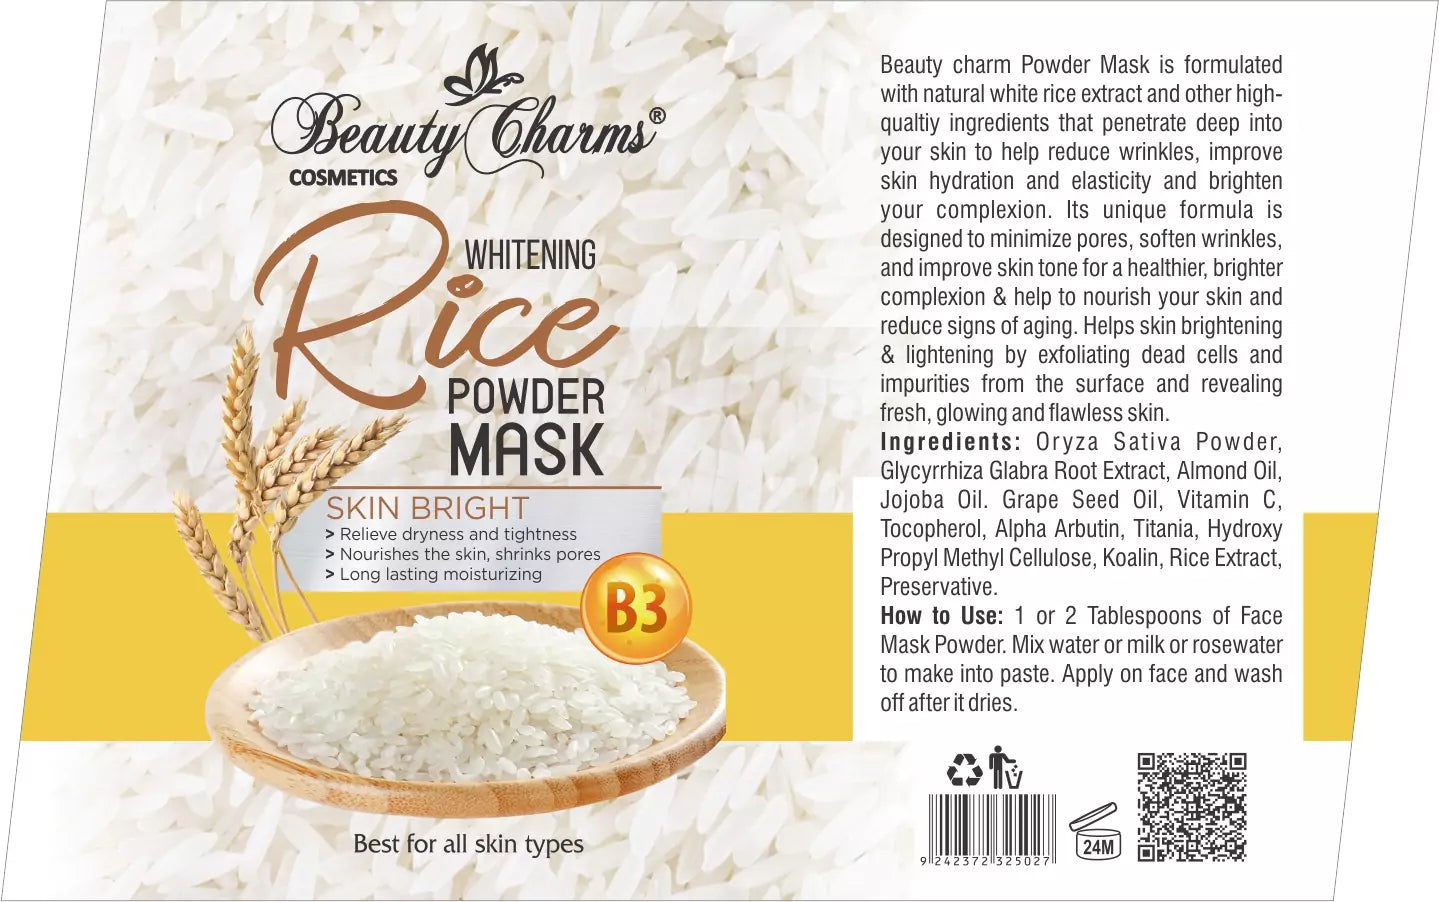 whitening rice powder mask